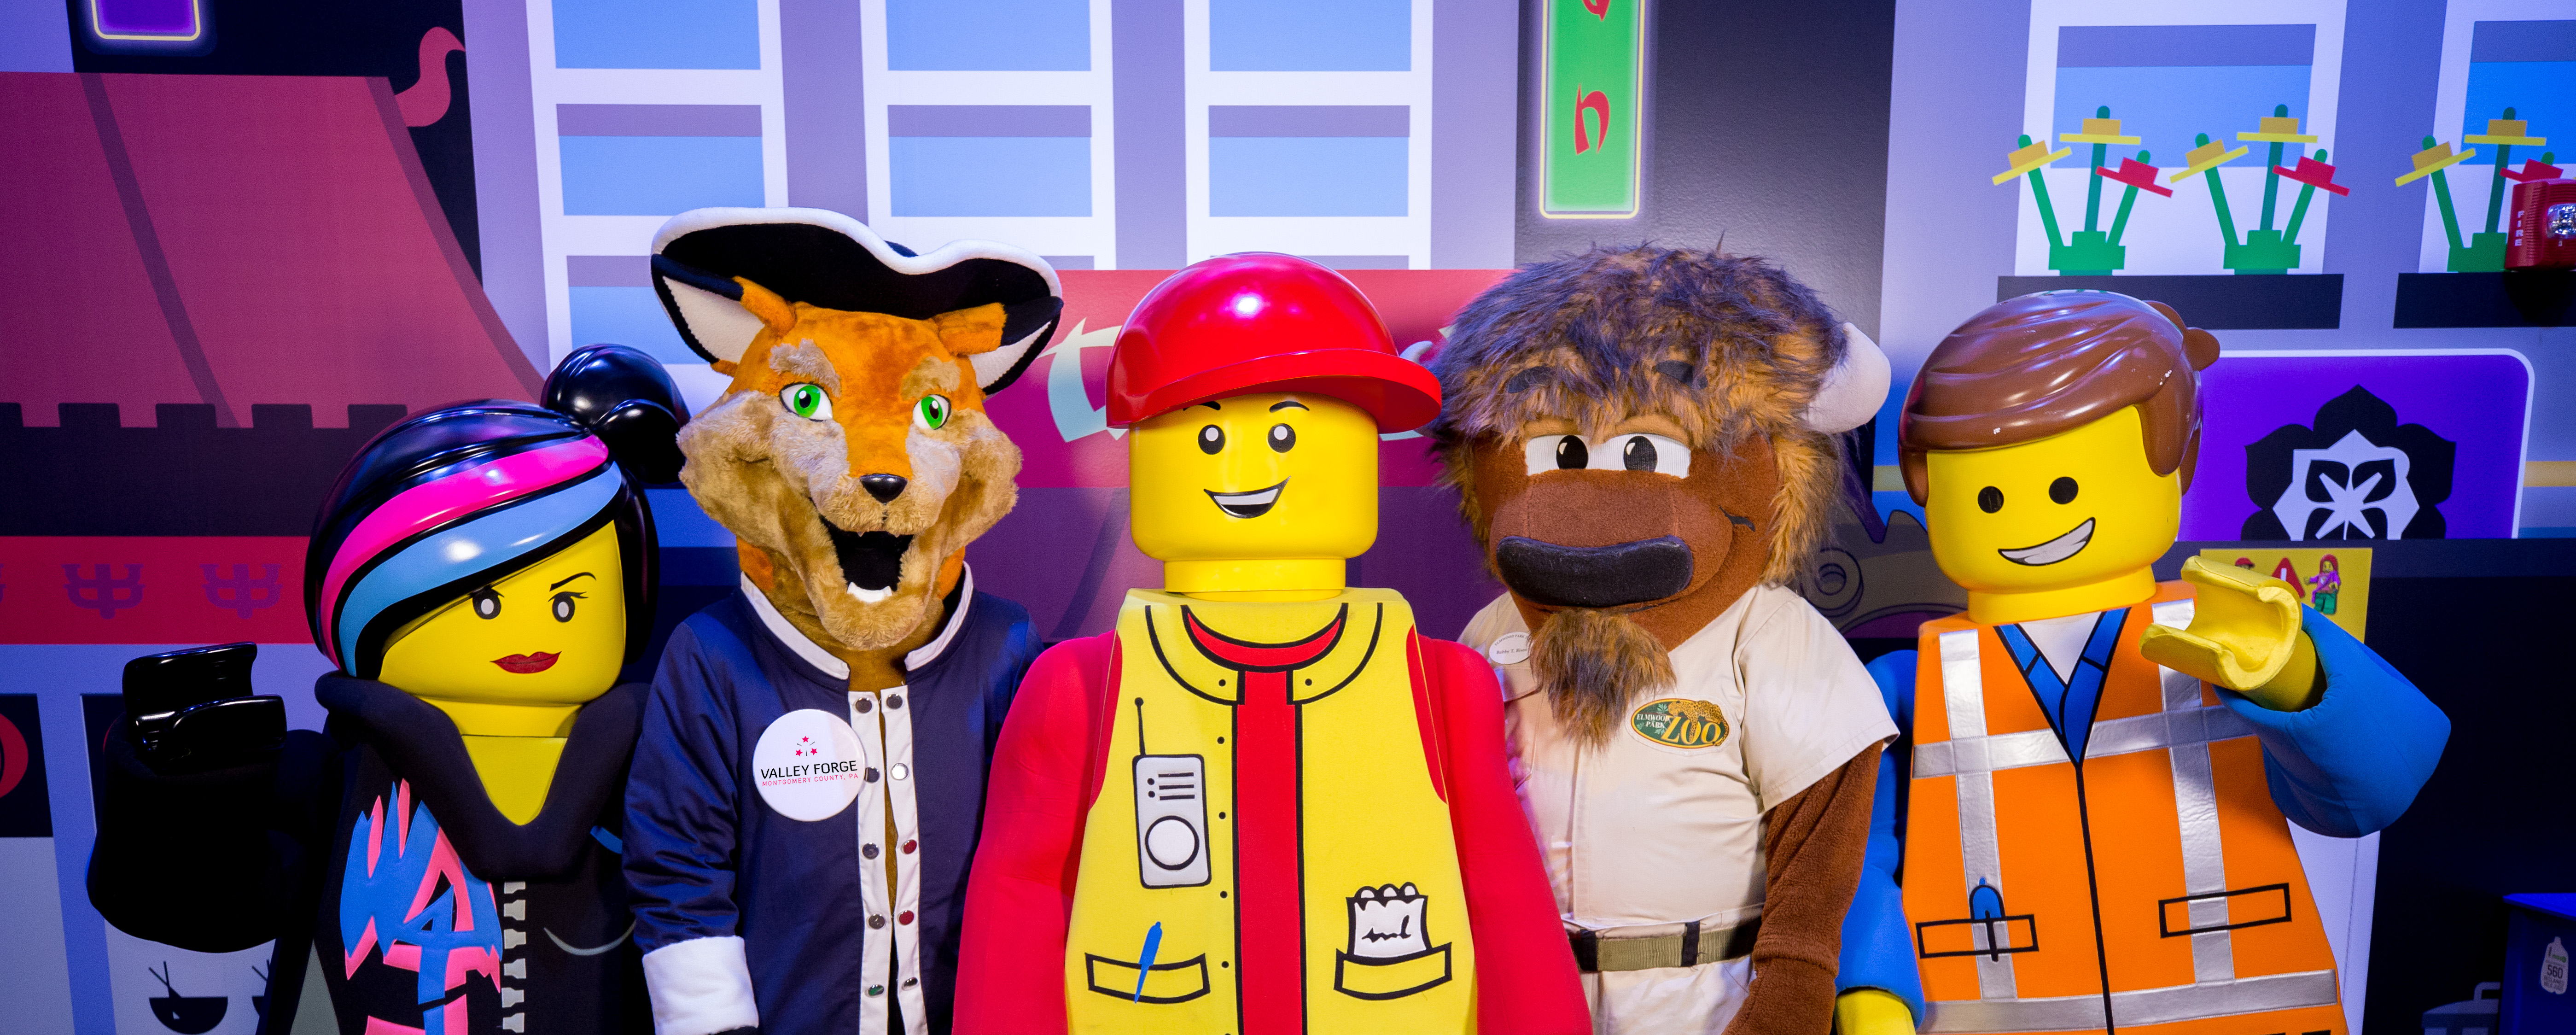 Monty and Mascots at Legoland